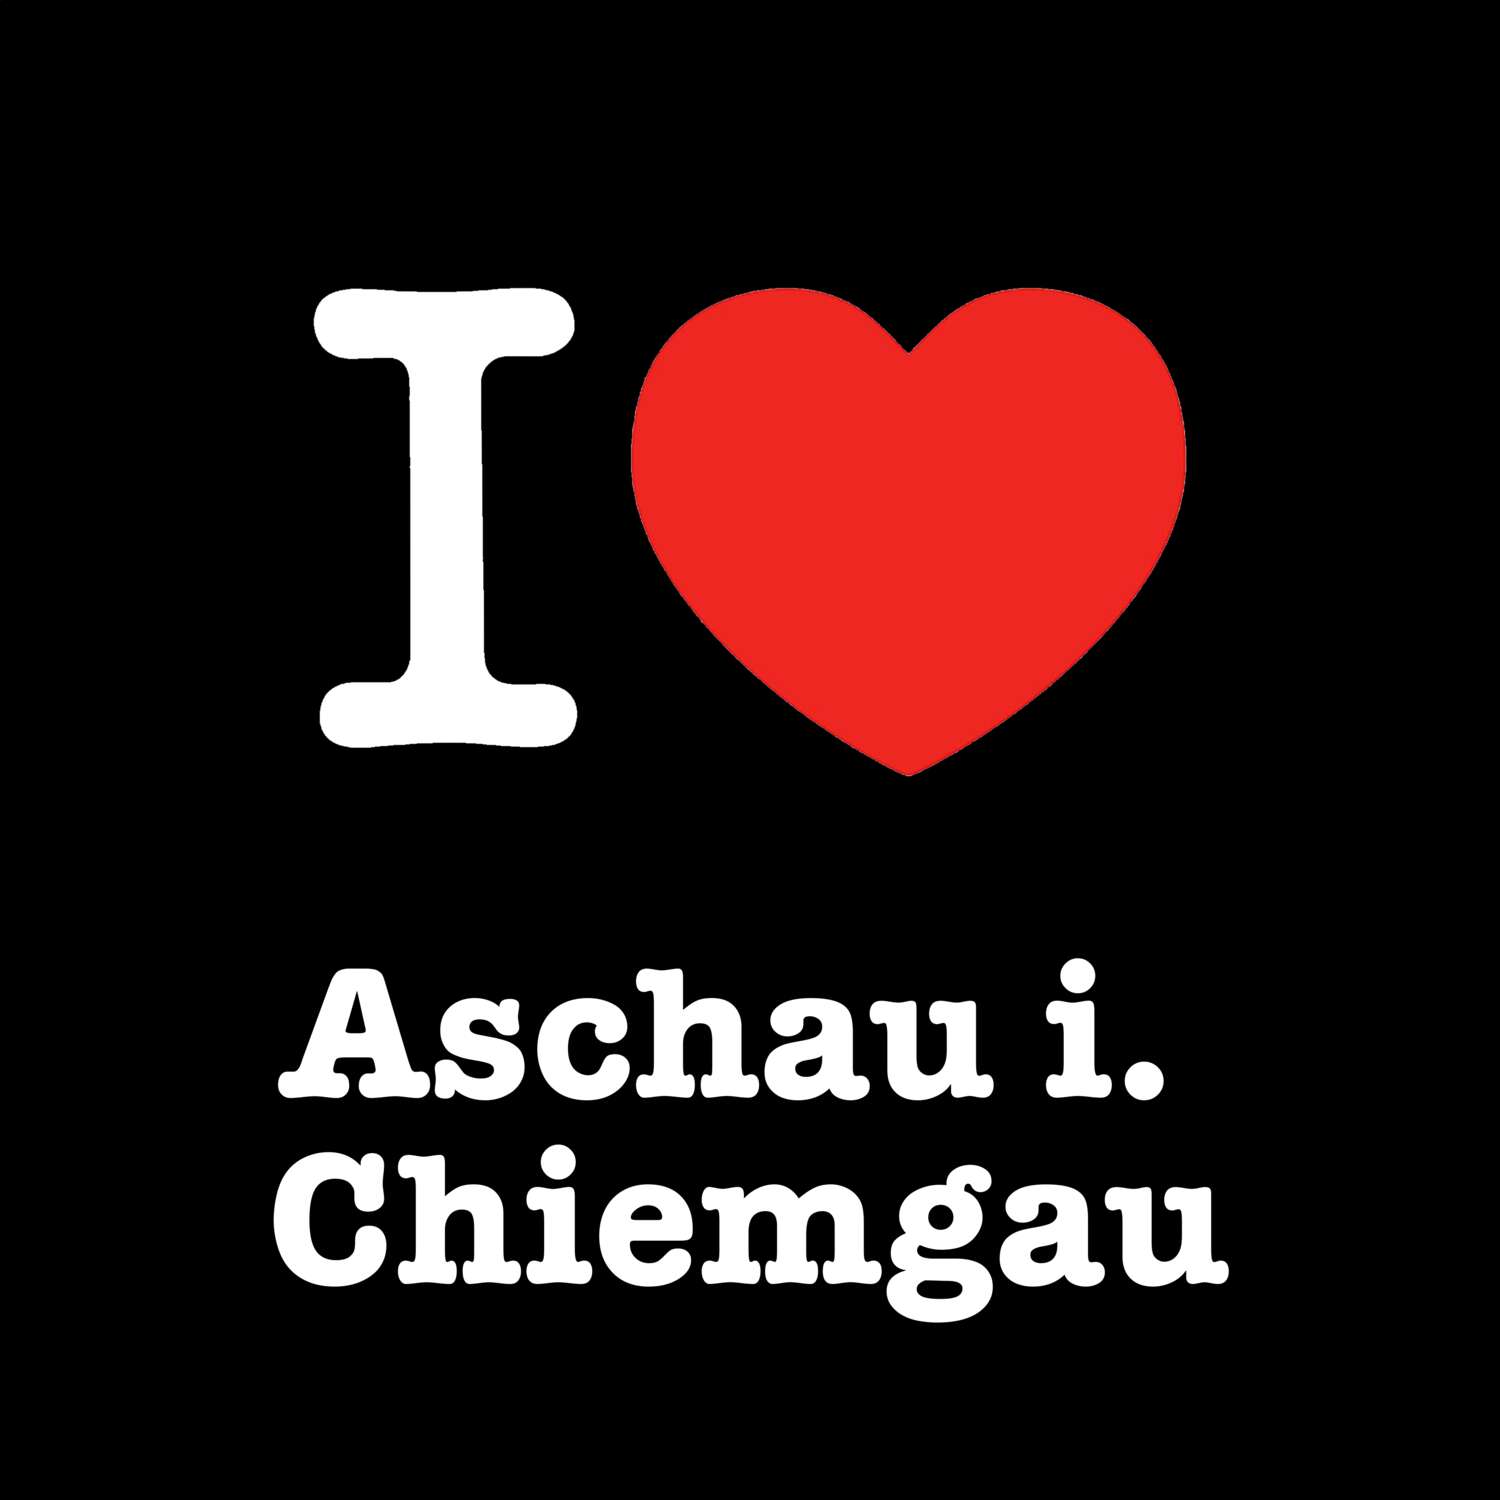 Aschau i. Chiemgau T-Shirt »I love«